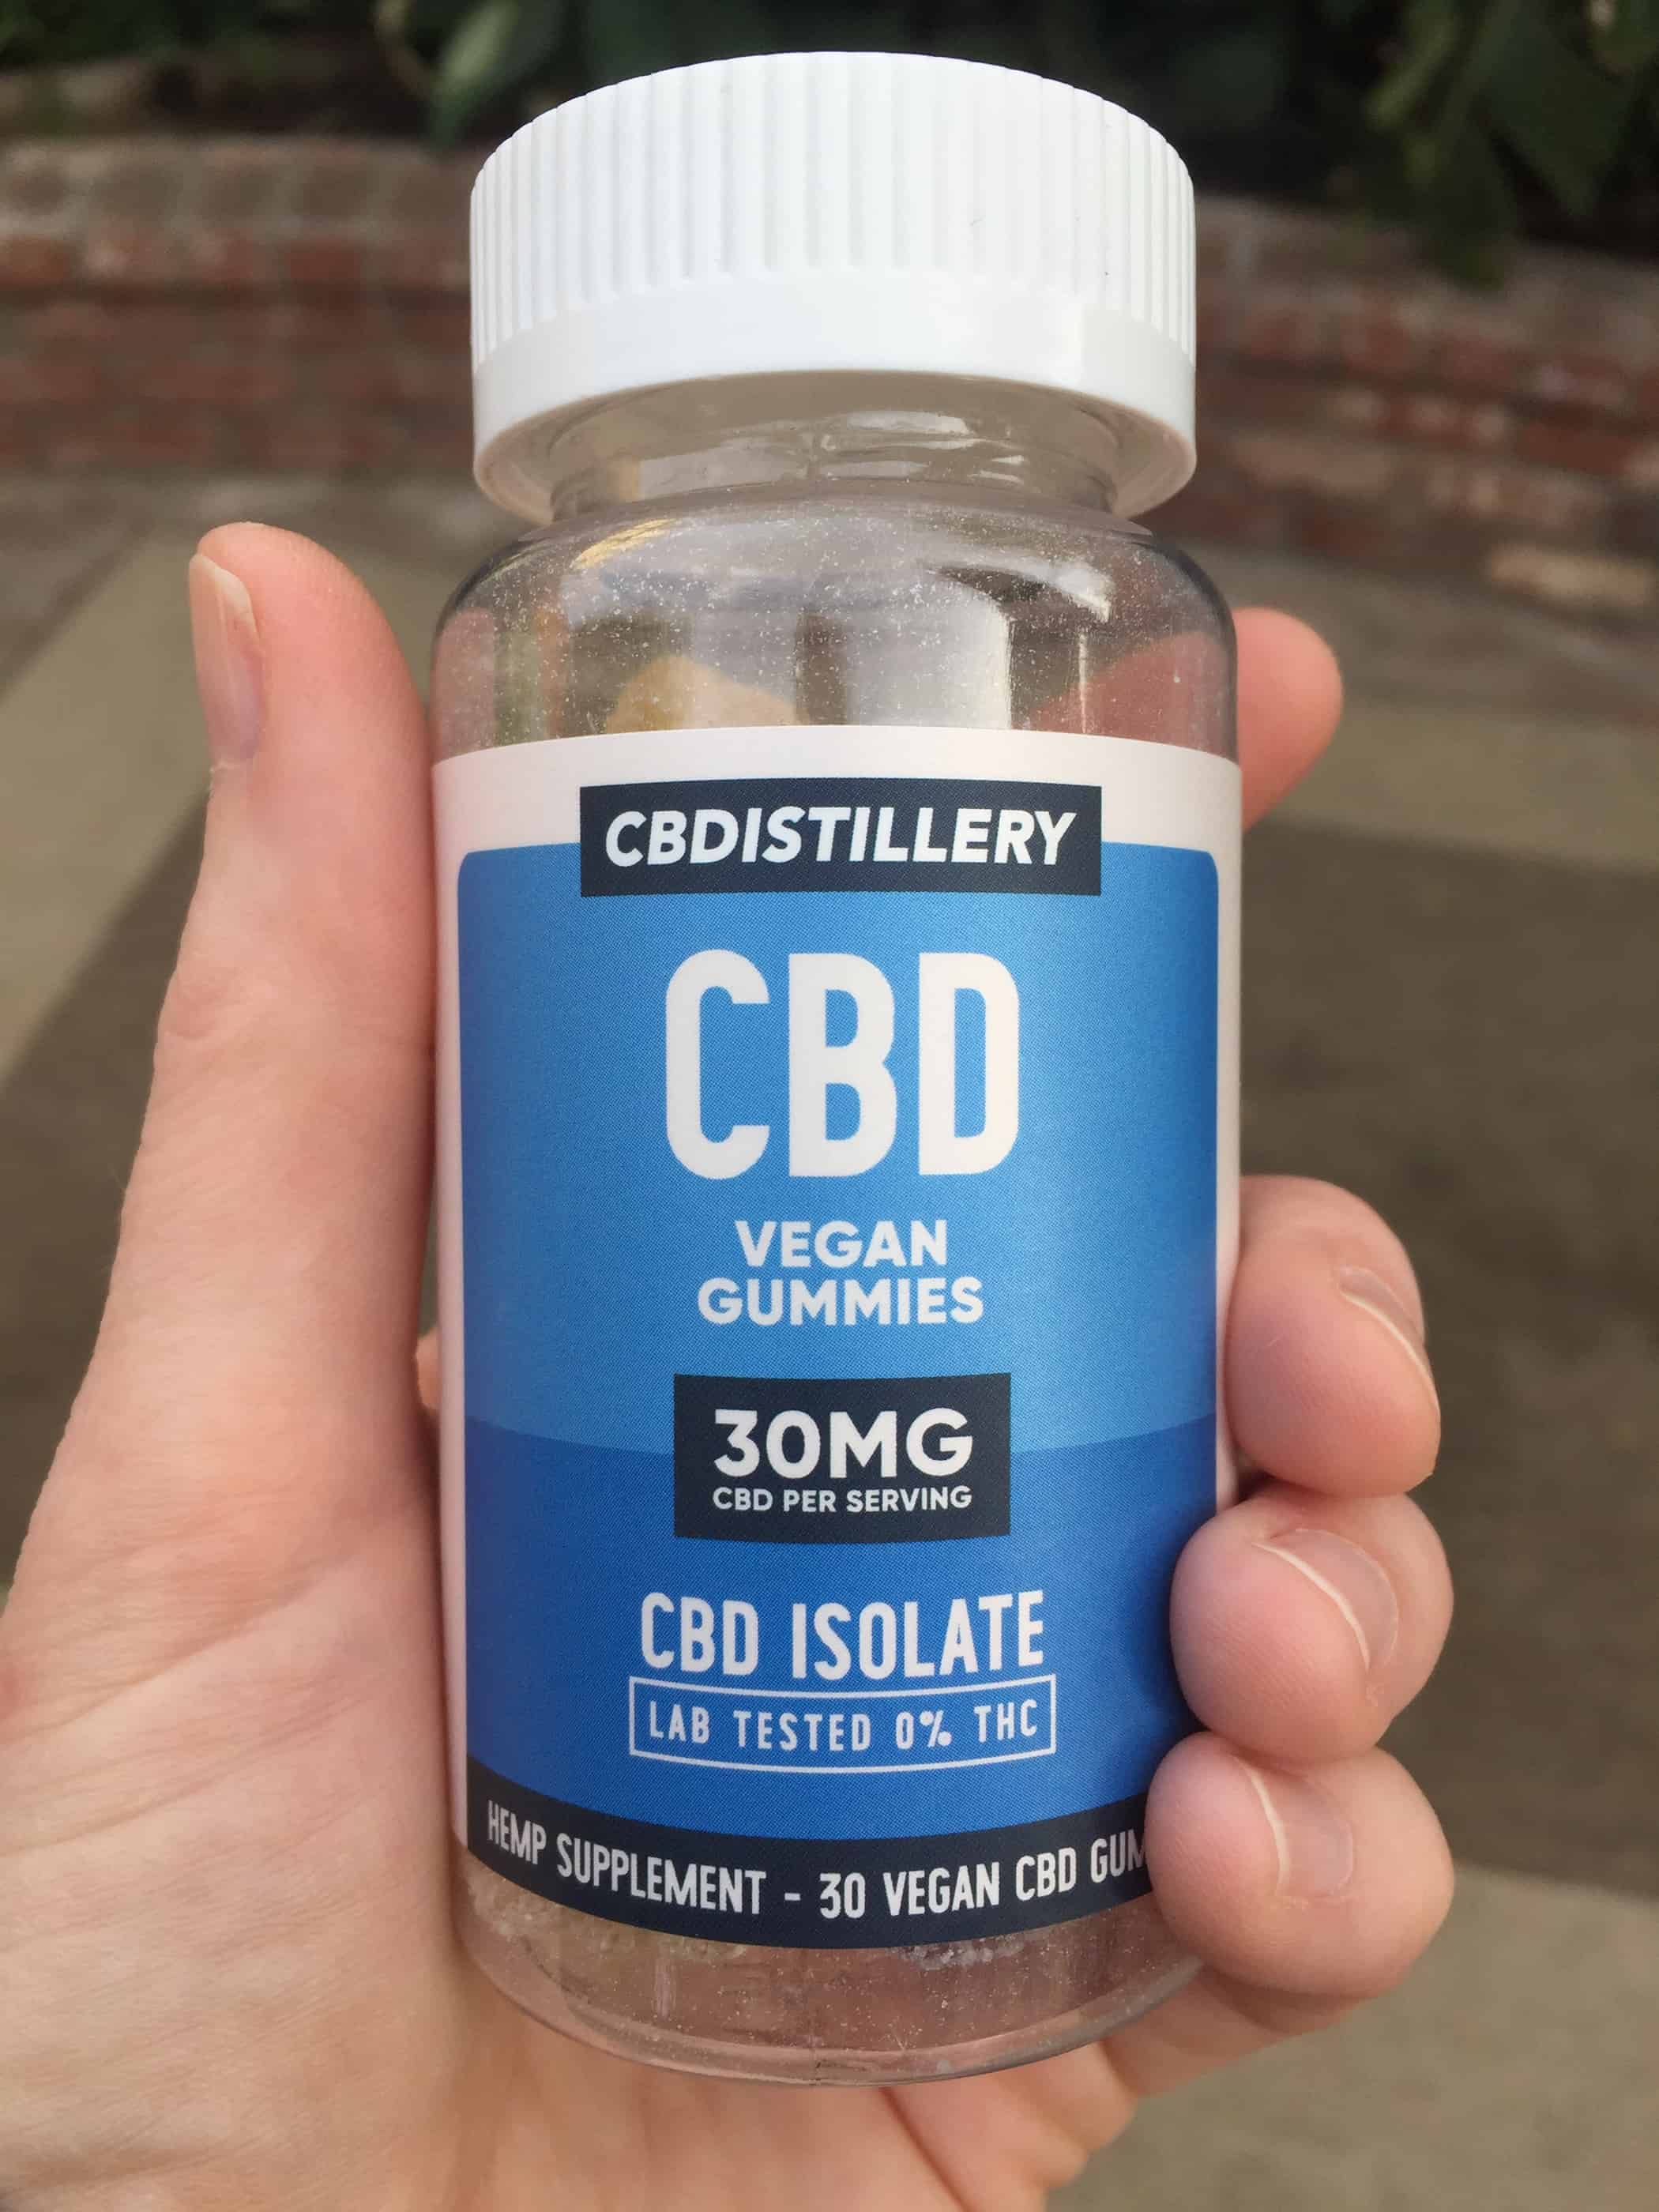 cbdistillery cbd isolate vegan gummies save on cannabis review